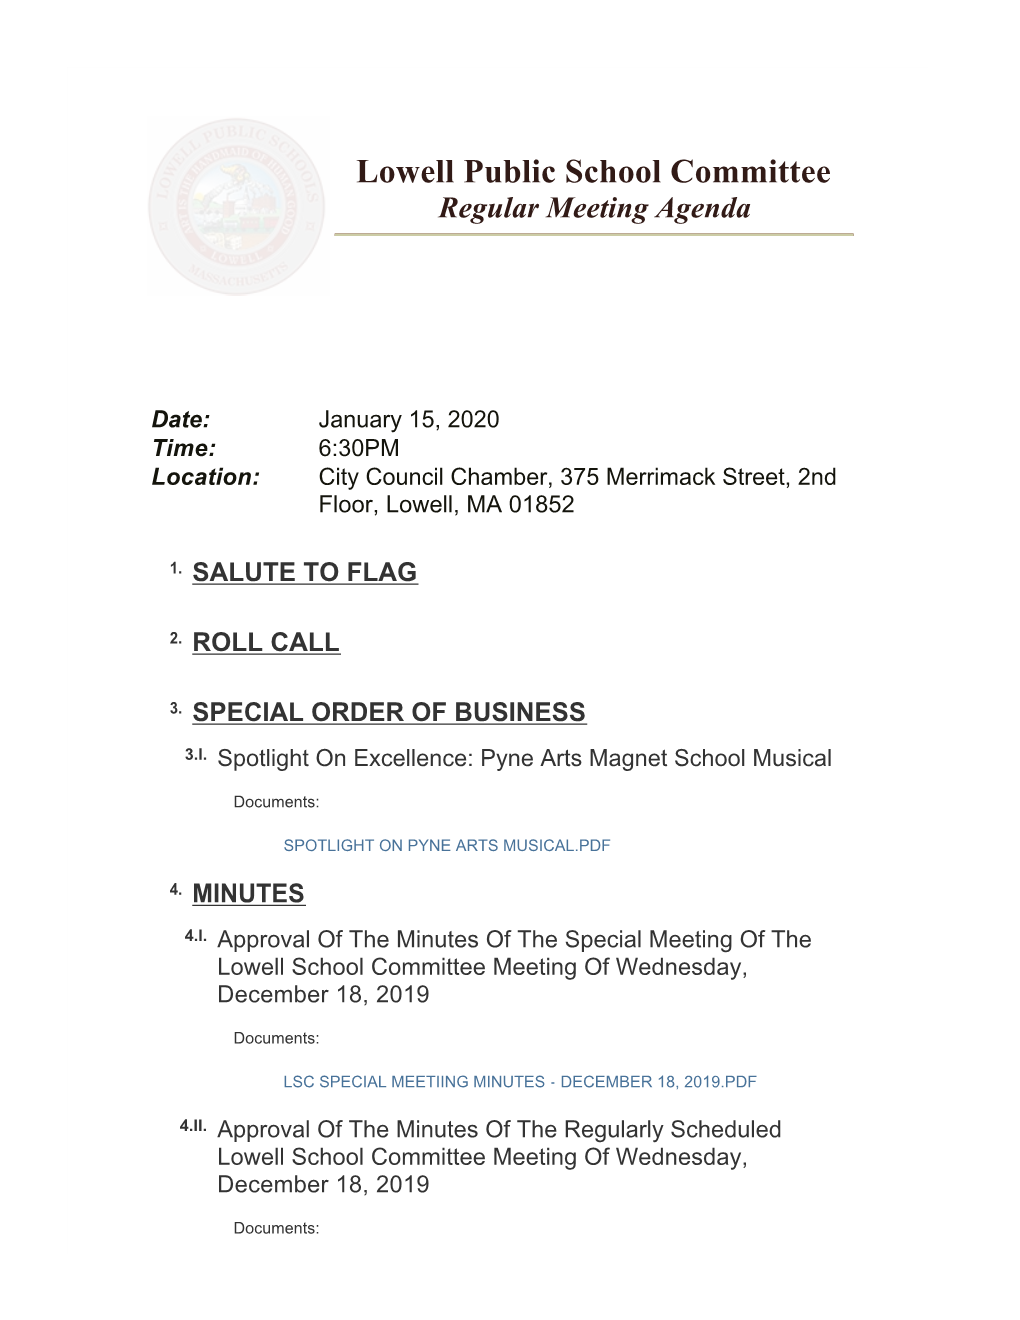 Lowell Public School Committee Regular Meeting Agenda